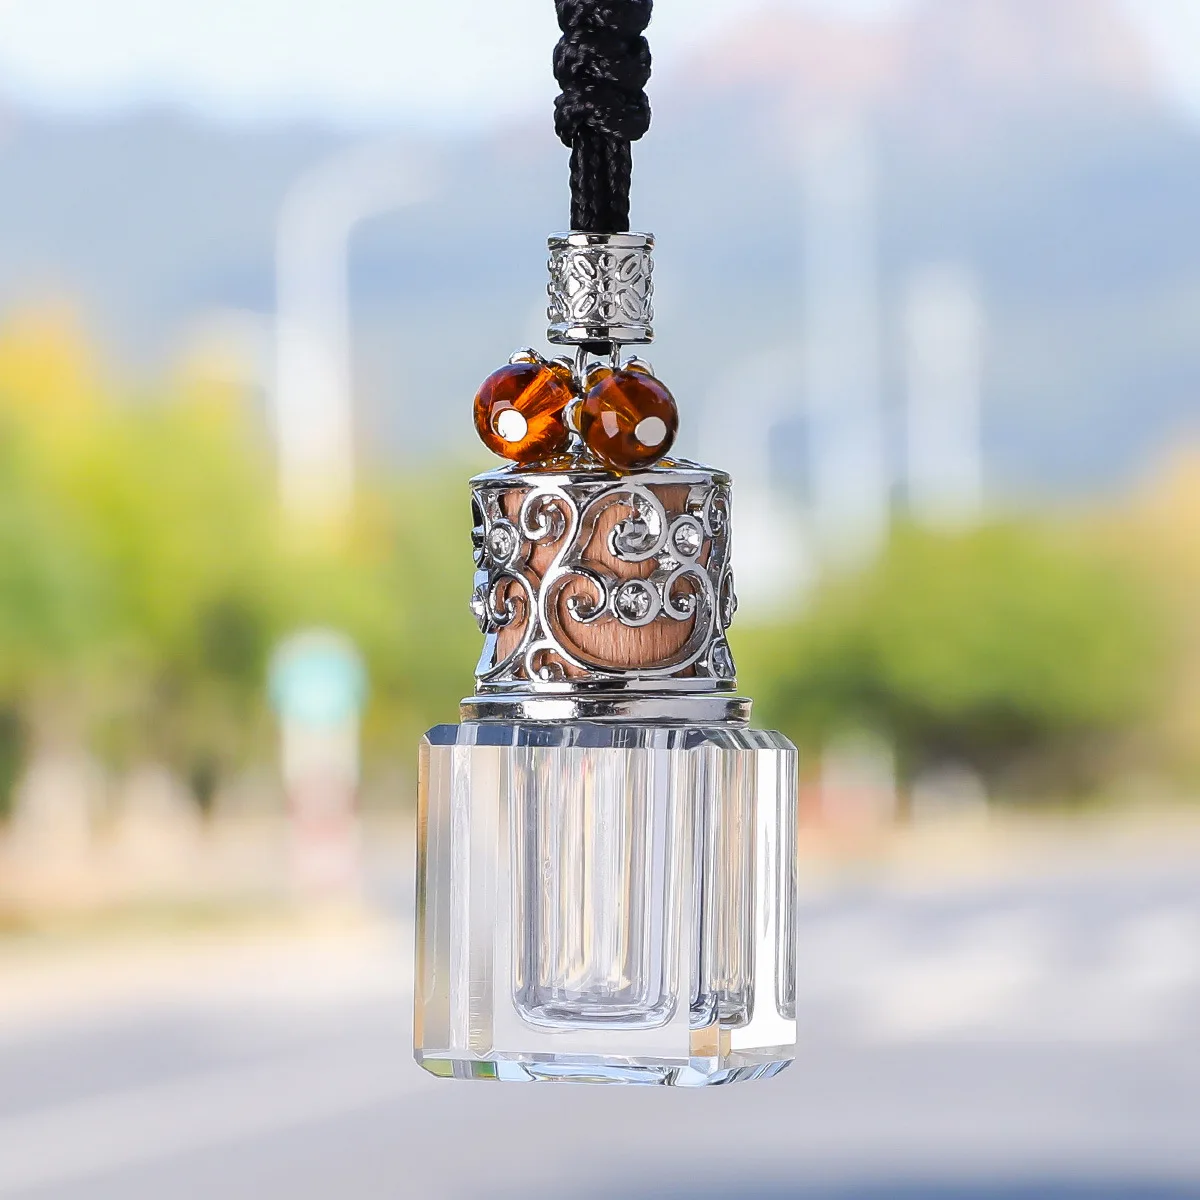 Empty car diffuser Bottle Perfume Ornament Hanging Gadget Air